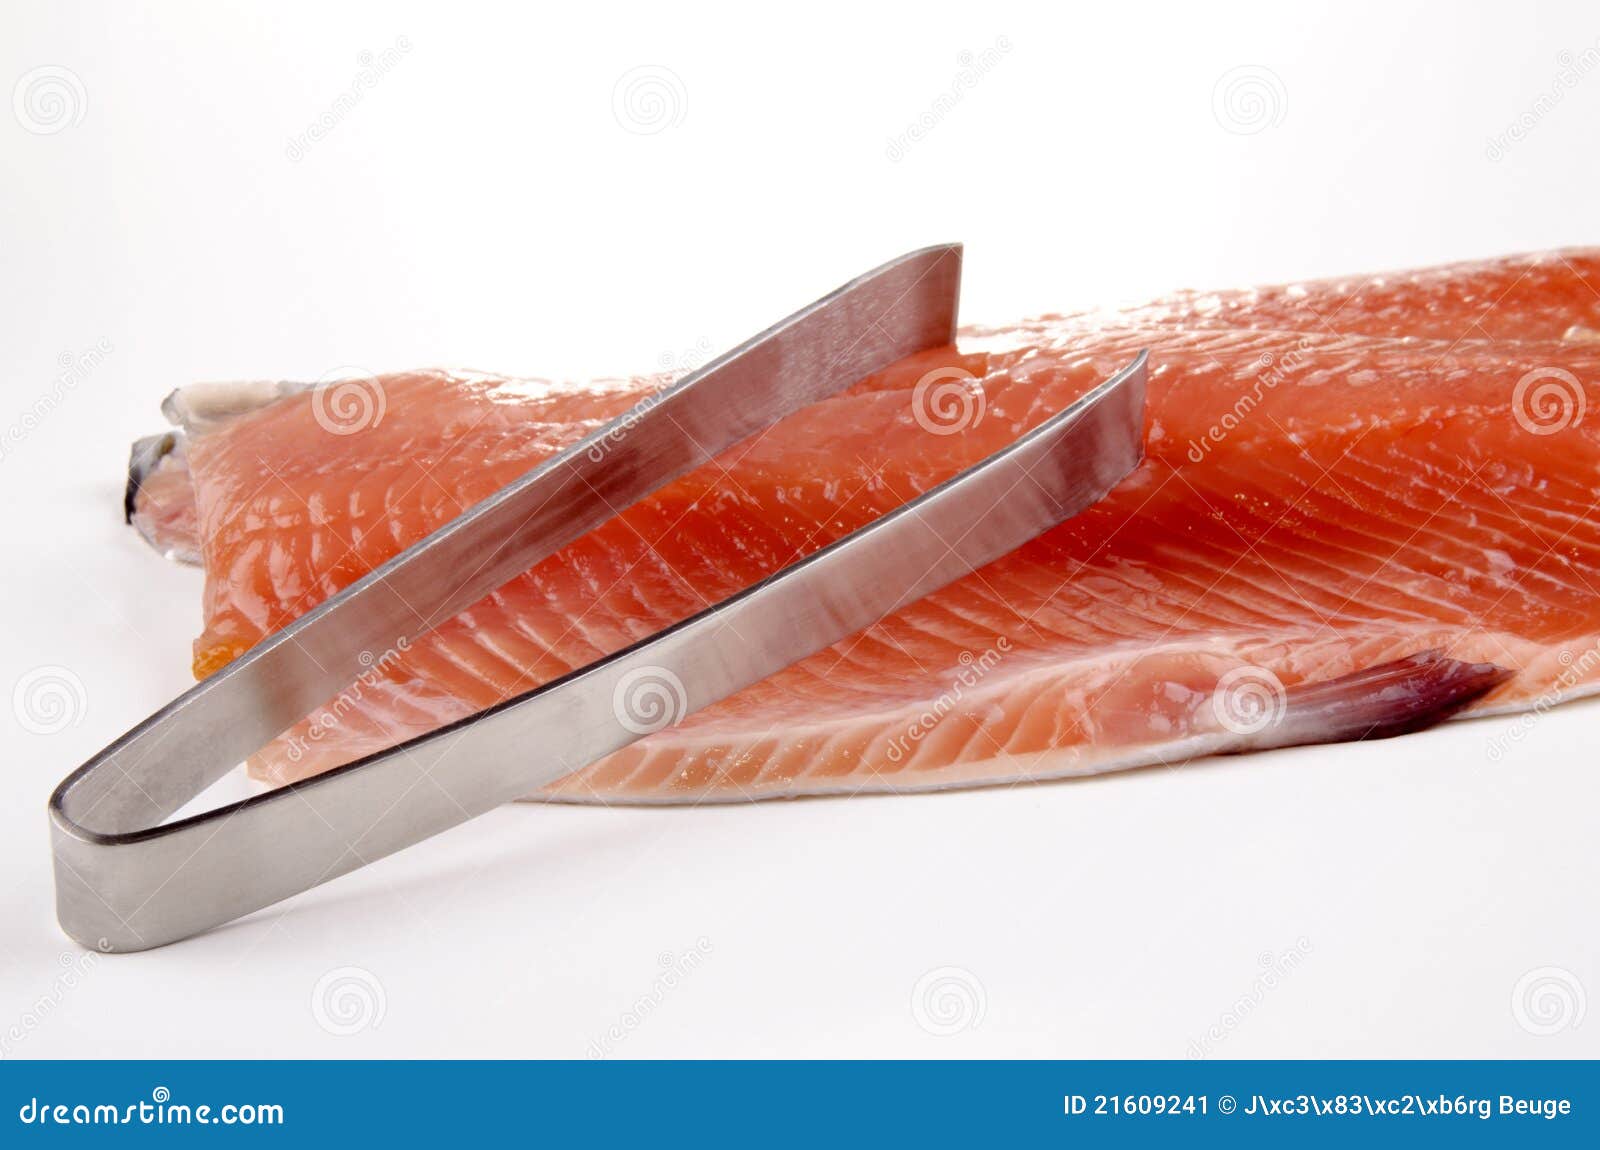 salmon fillet and a fish bone tong